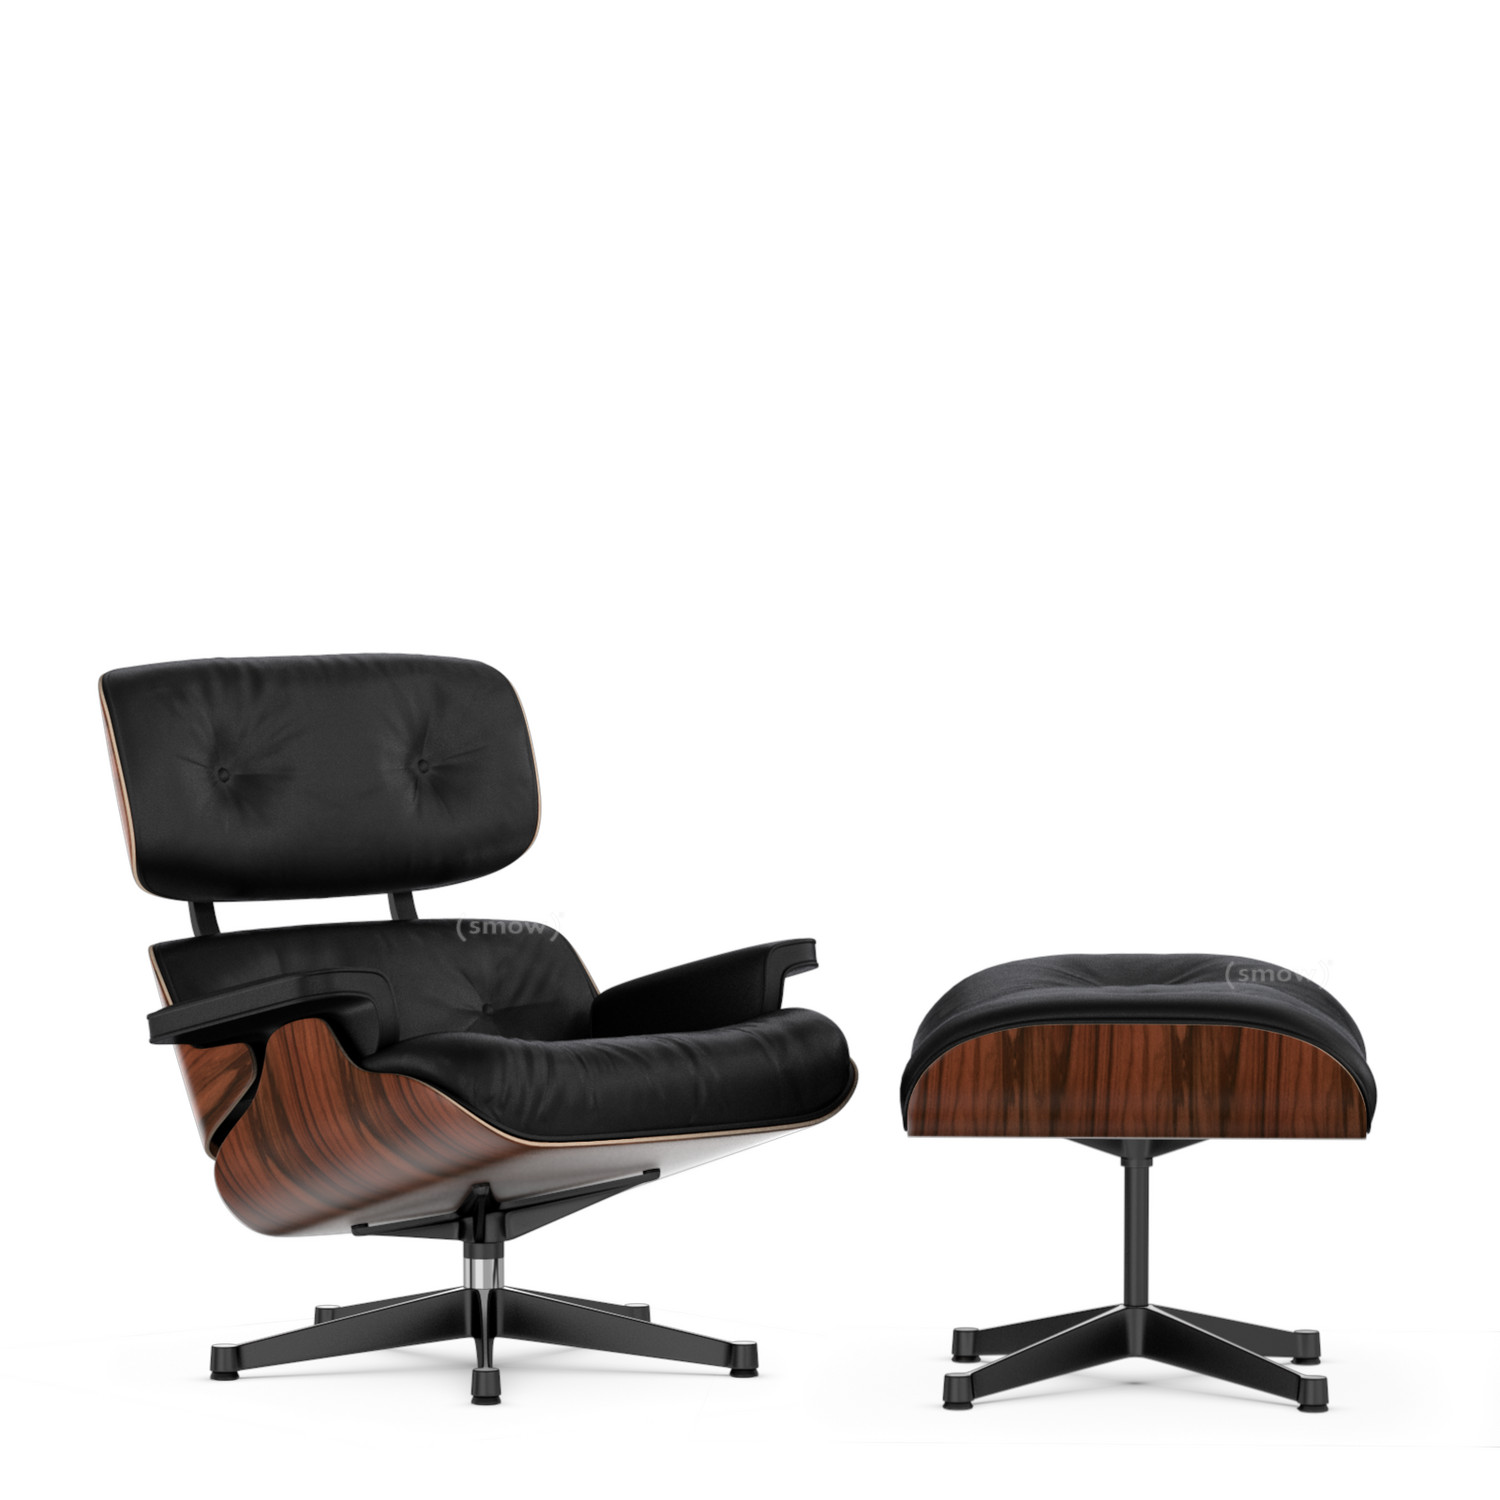 Vitra Lounge Chair Ottoman Santos, Black Leather Swivel Chair With Ottoman